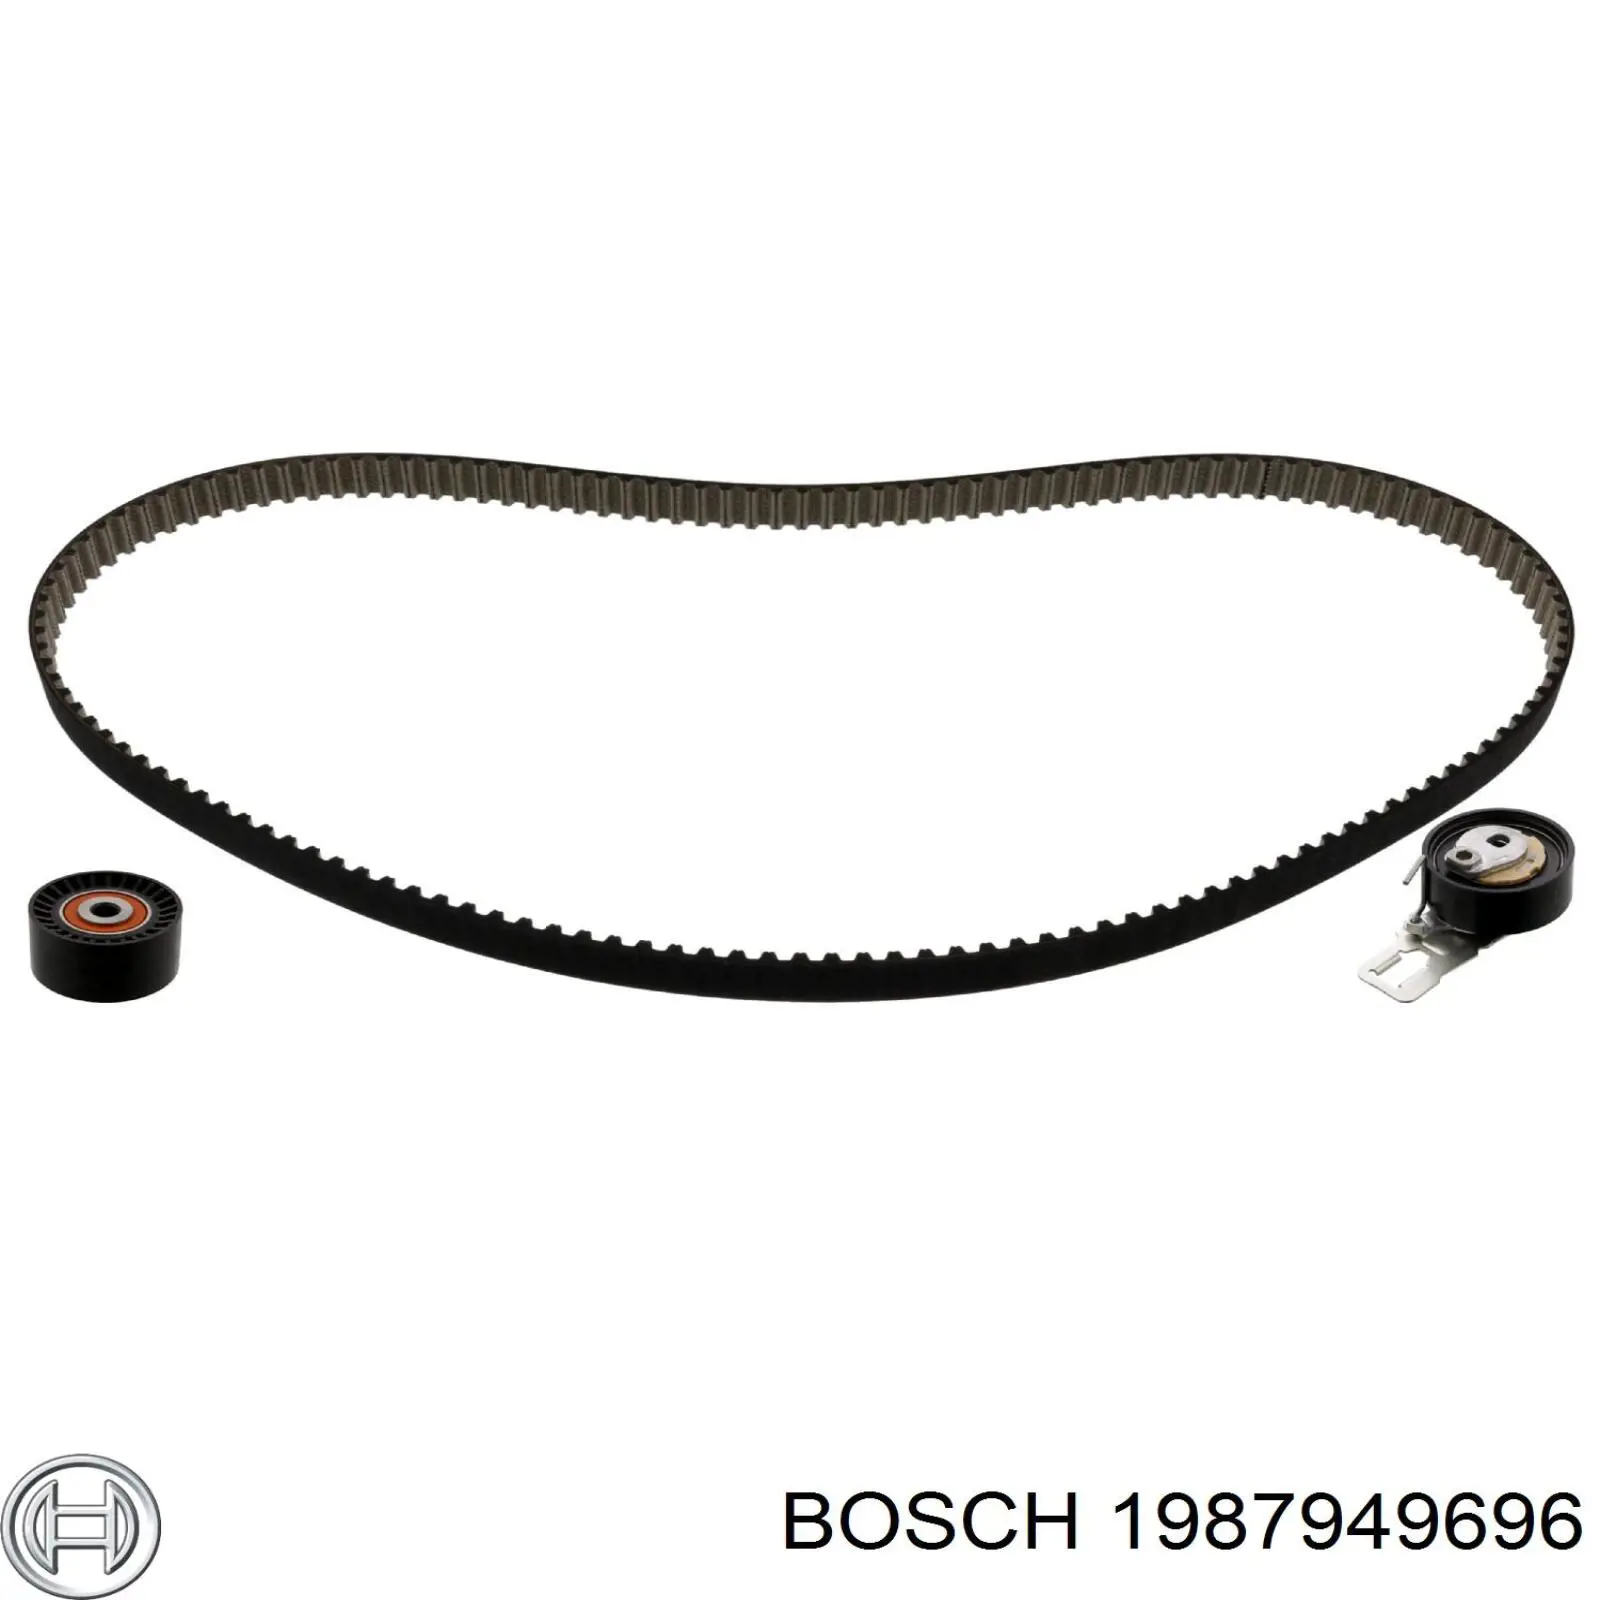 1987949696 Bosch correa distribución